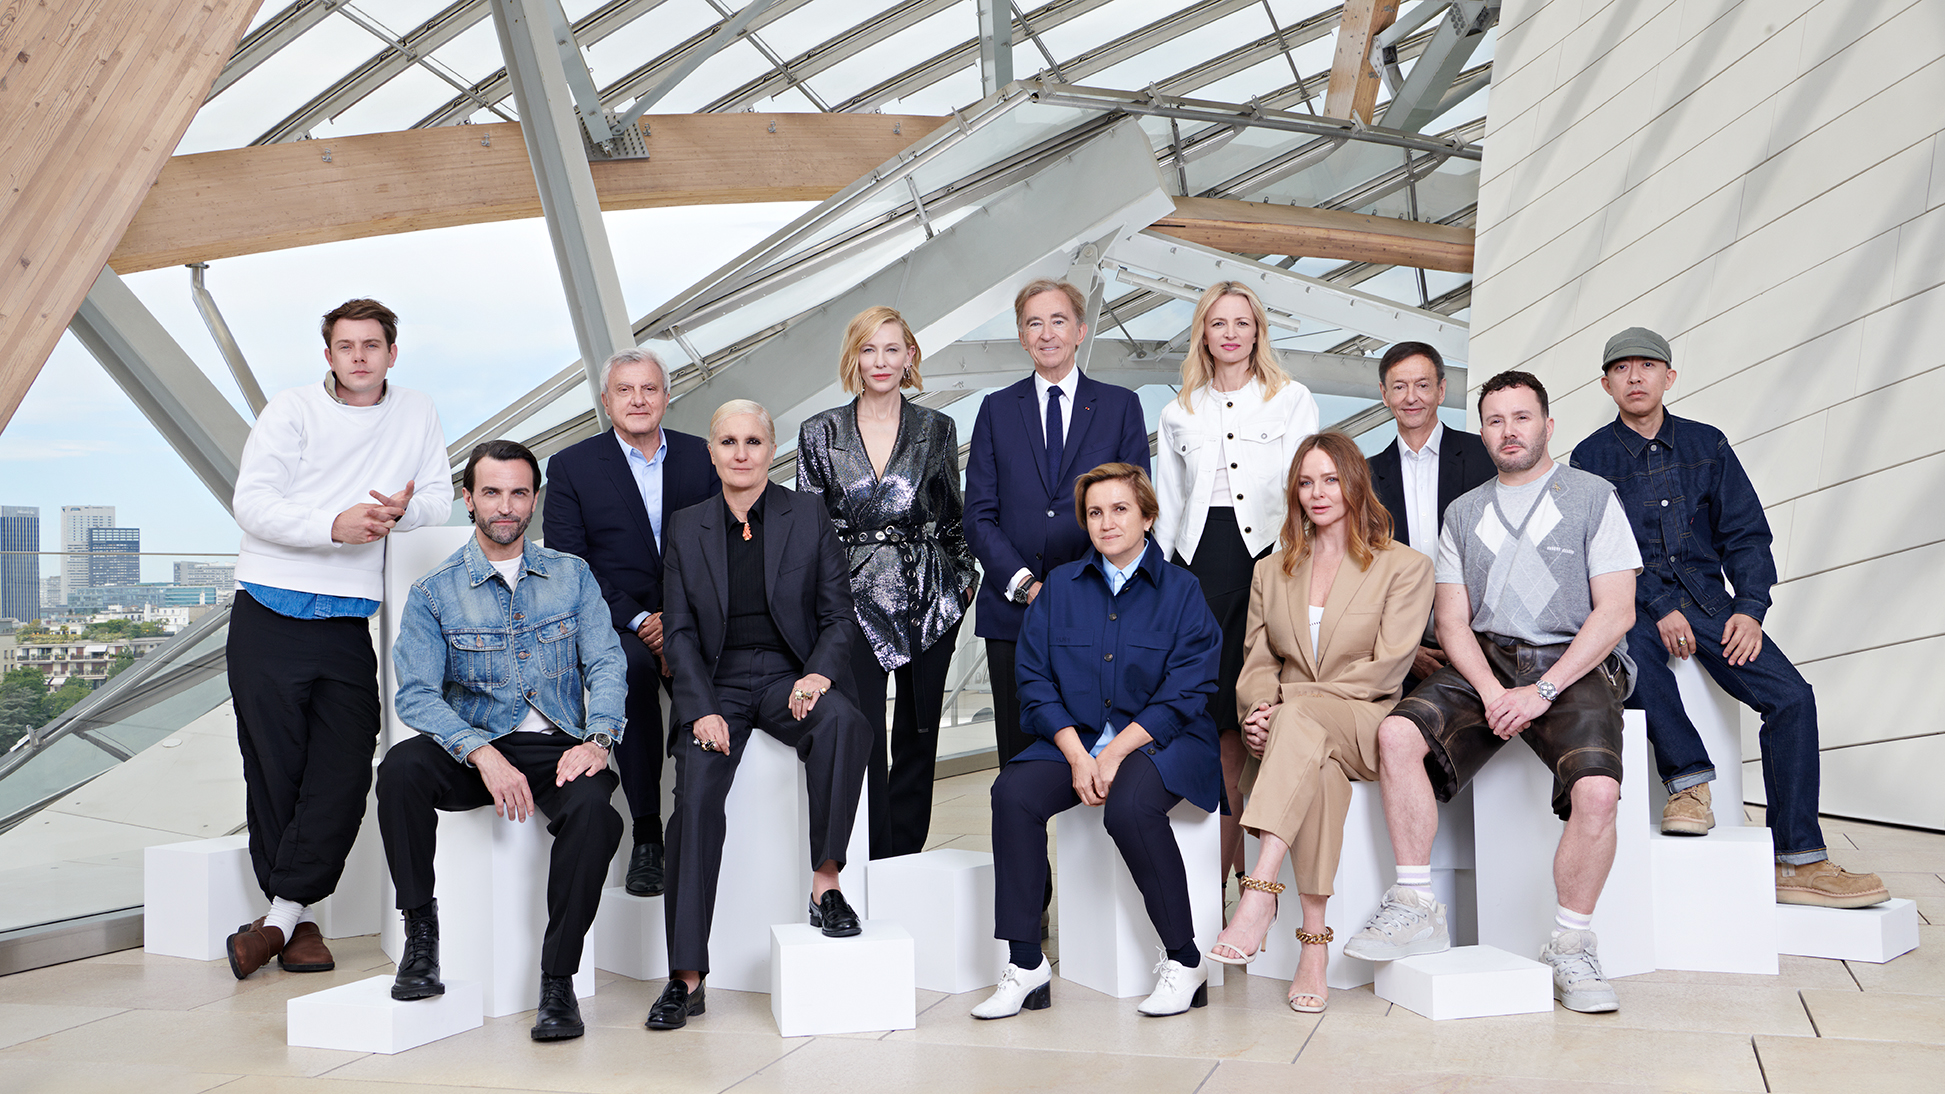 The members of the 2022 Jury